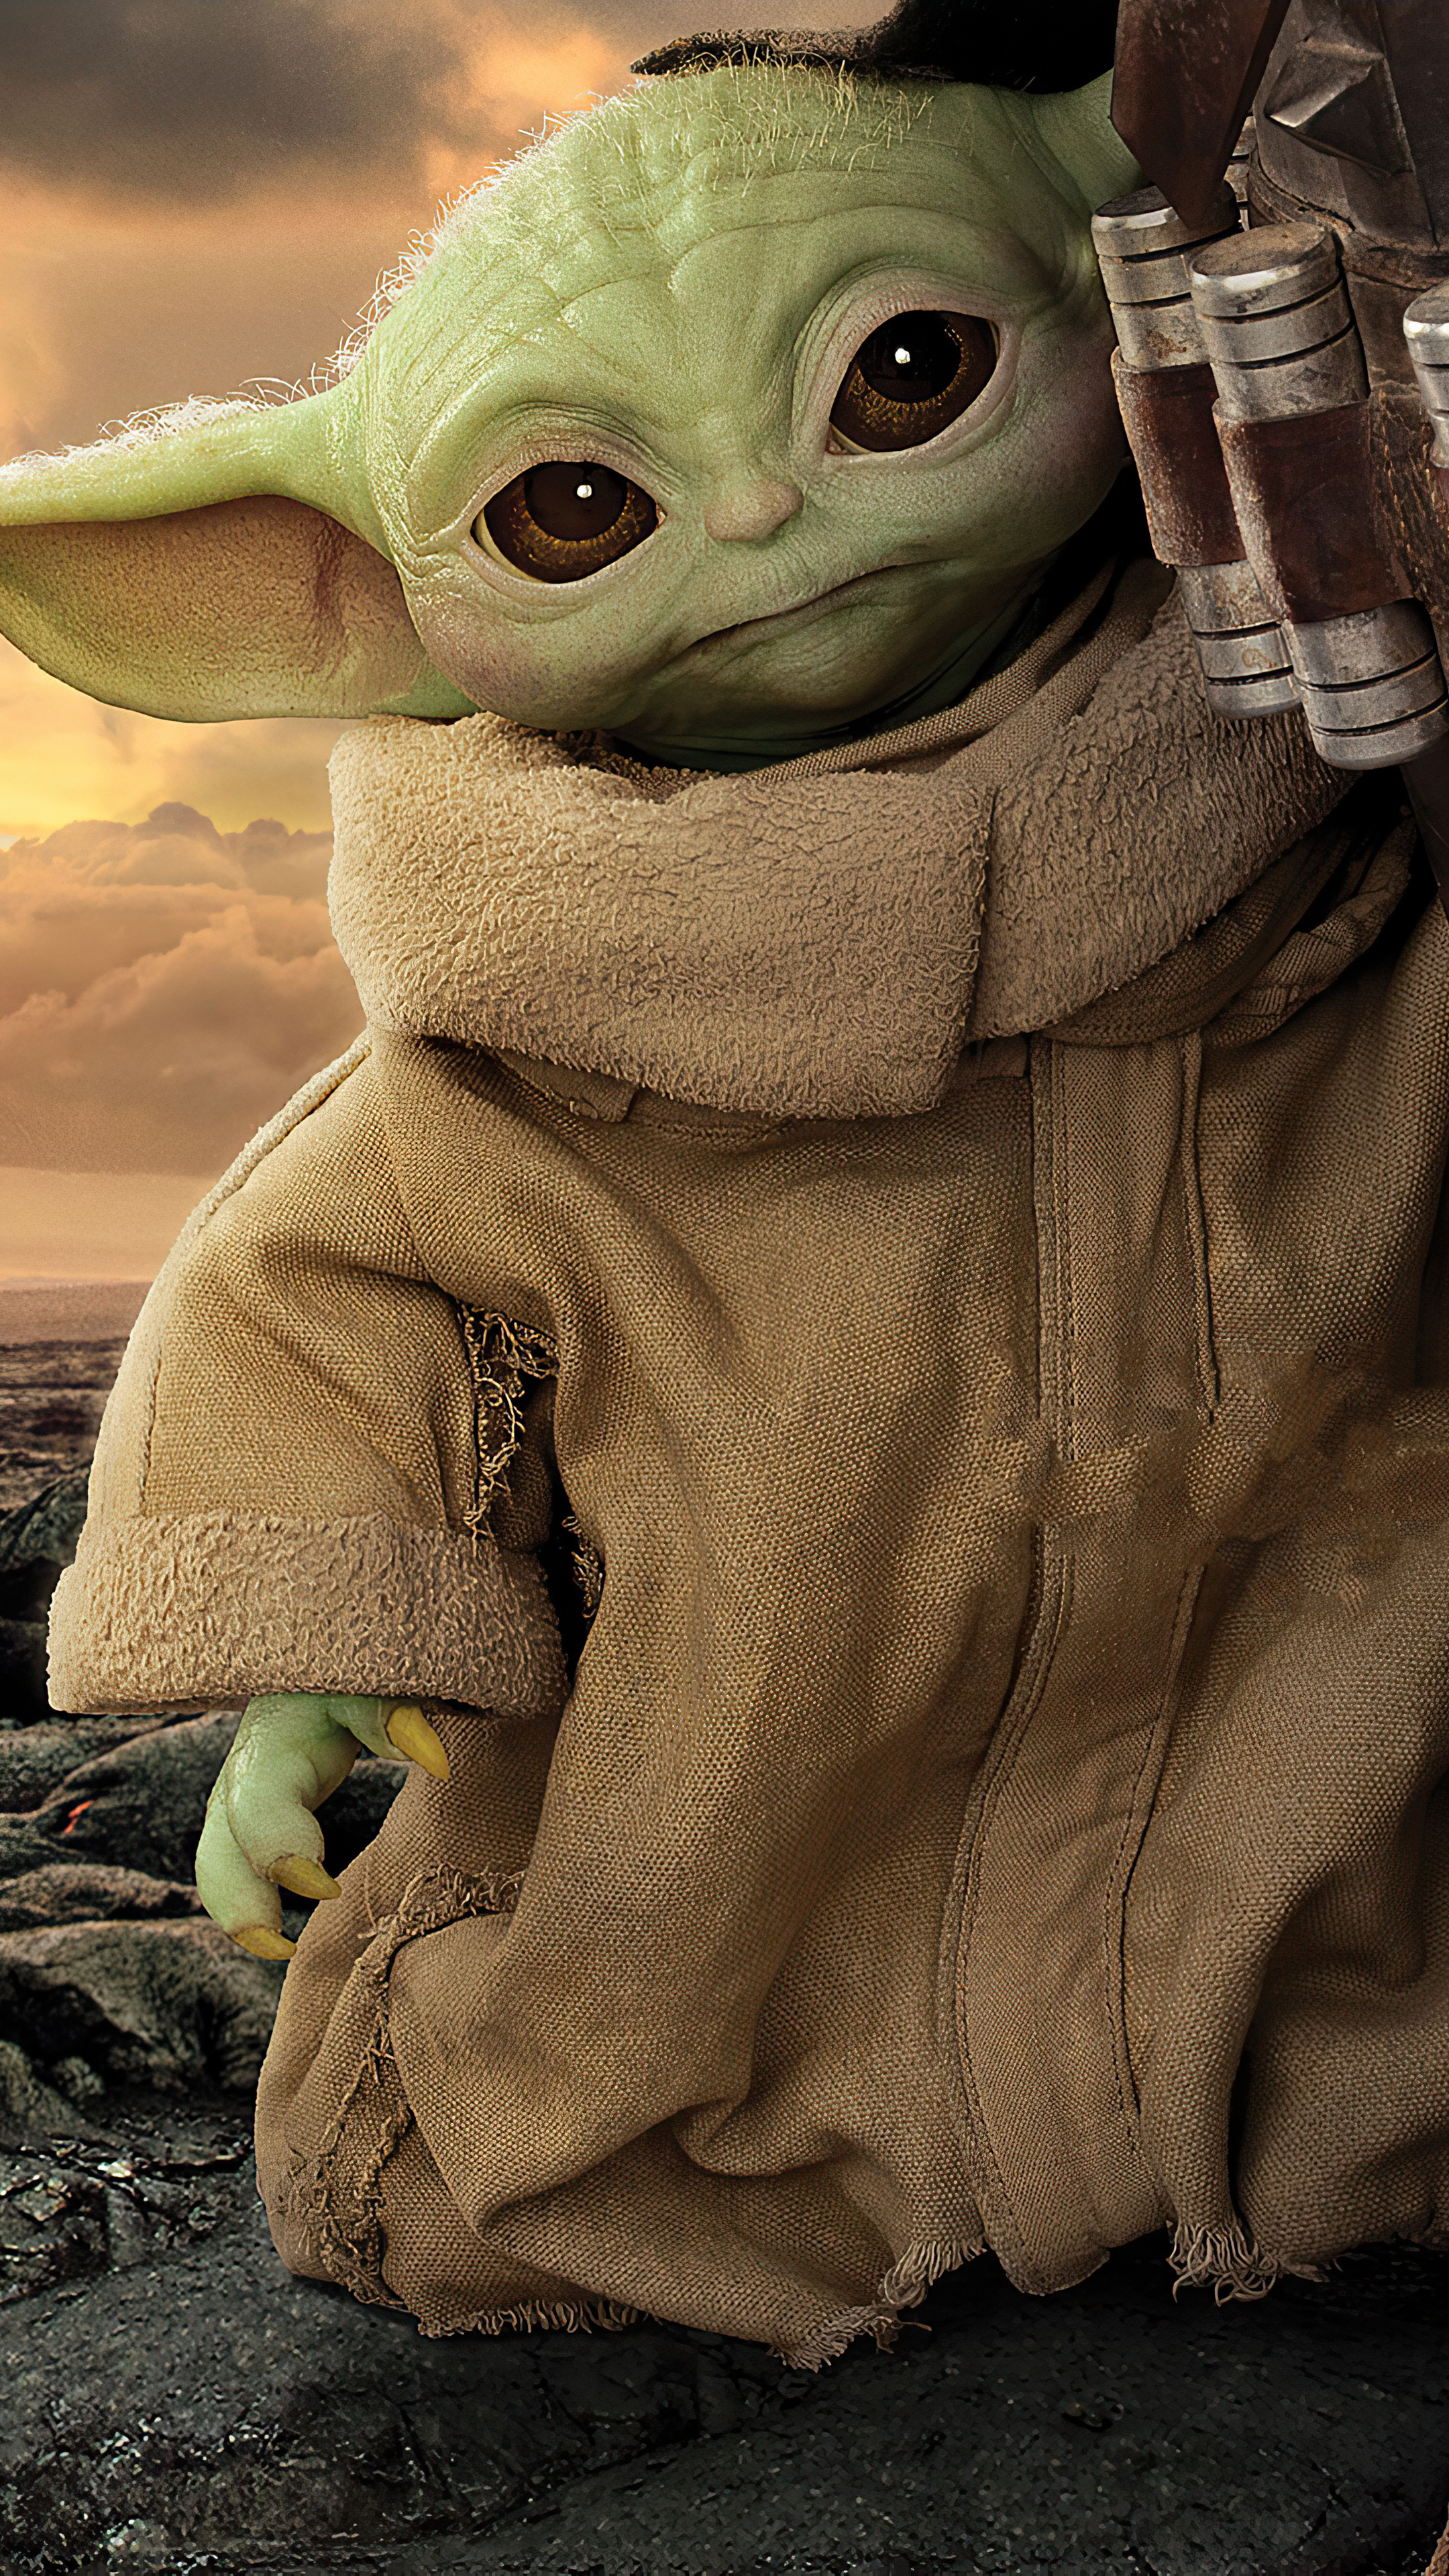 Yoda (Star Wars), Mandalorian season 2, Baby Yoda, Sony Xperia, 2160x3840 4K Phone